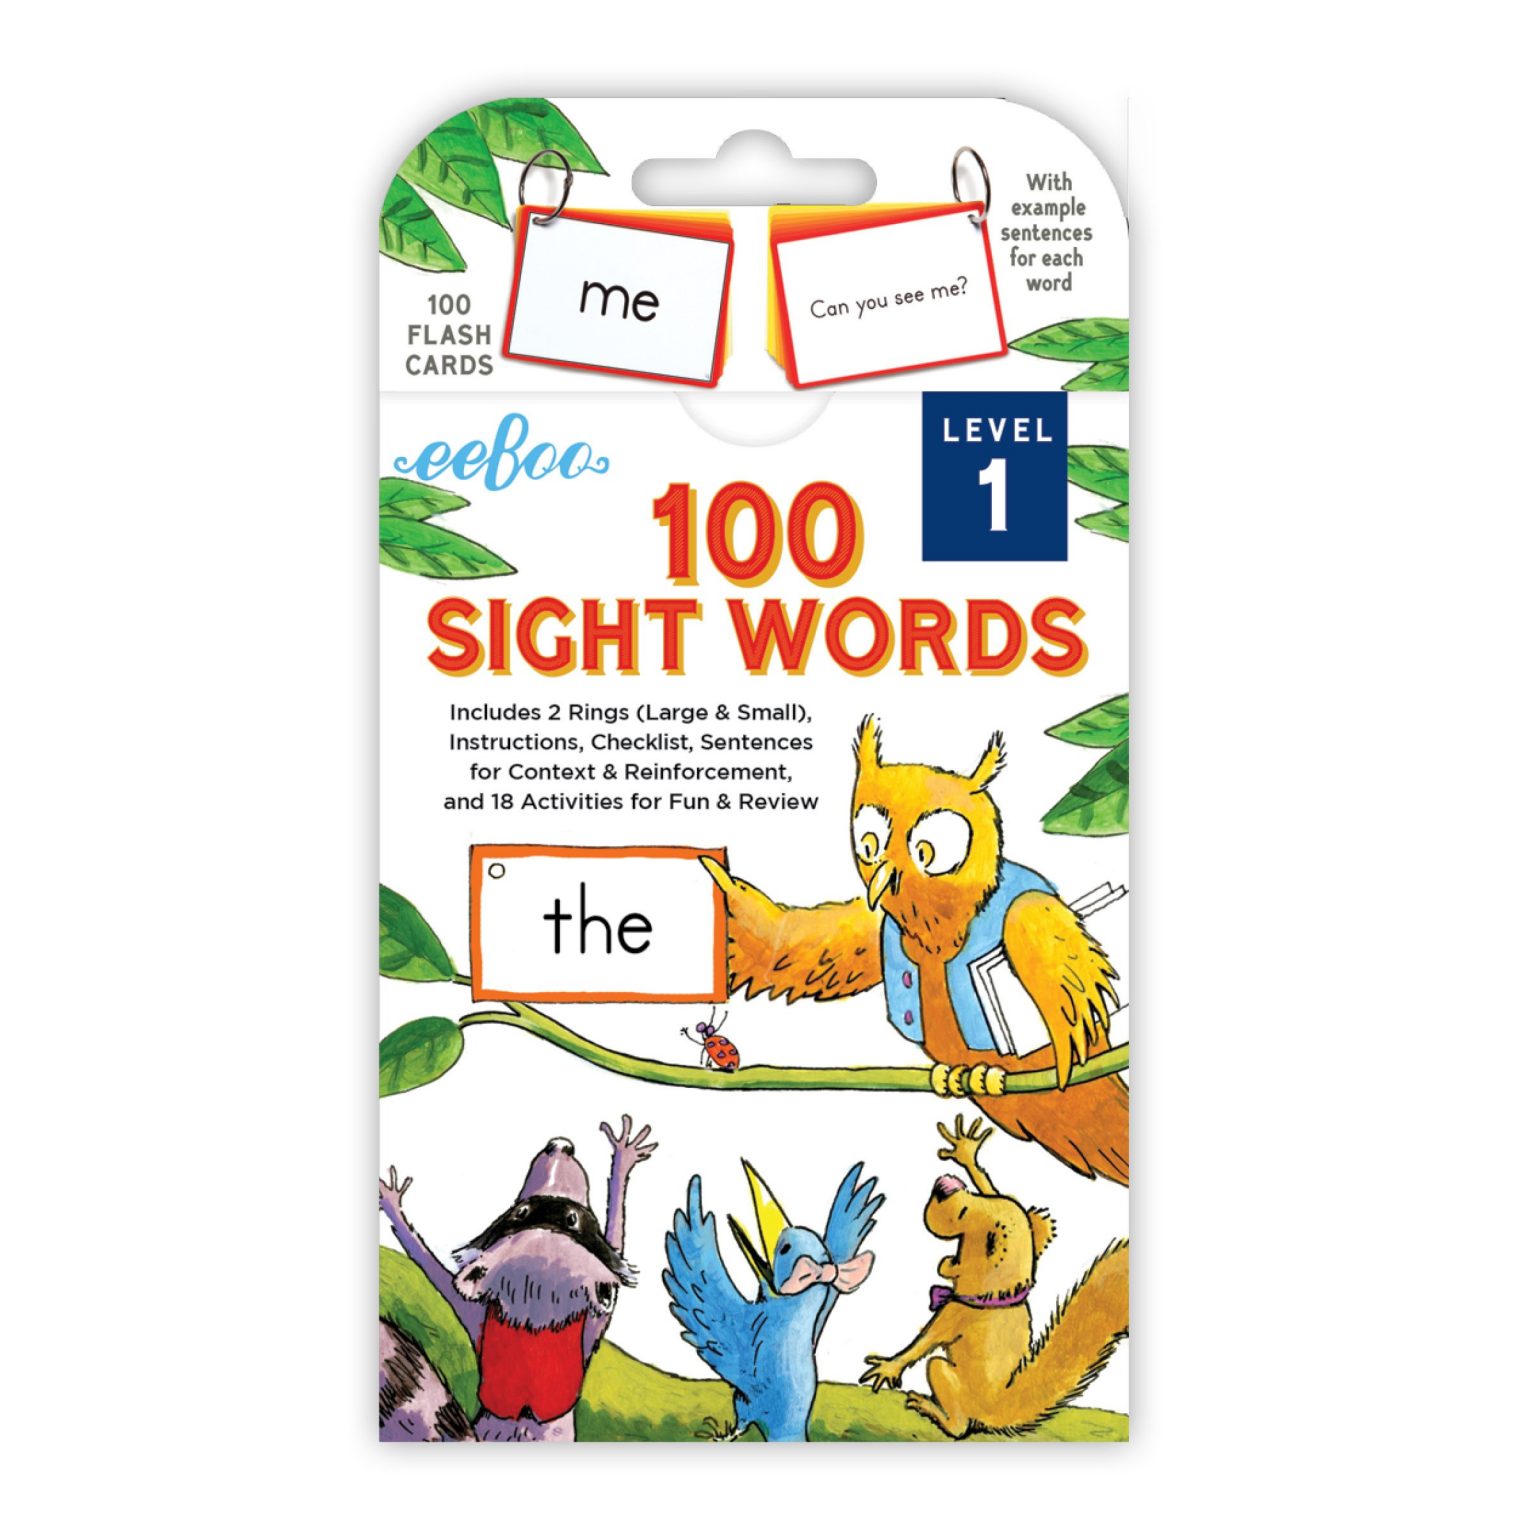 Word уровень 1. 100 Sight Words. Уровень 100 Word. Level one Sight Words. Flashcards for Level c2.